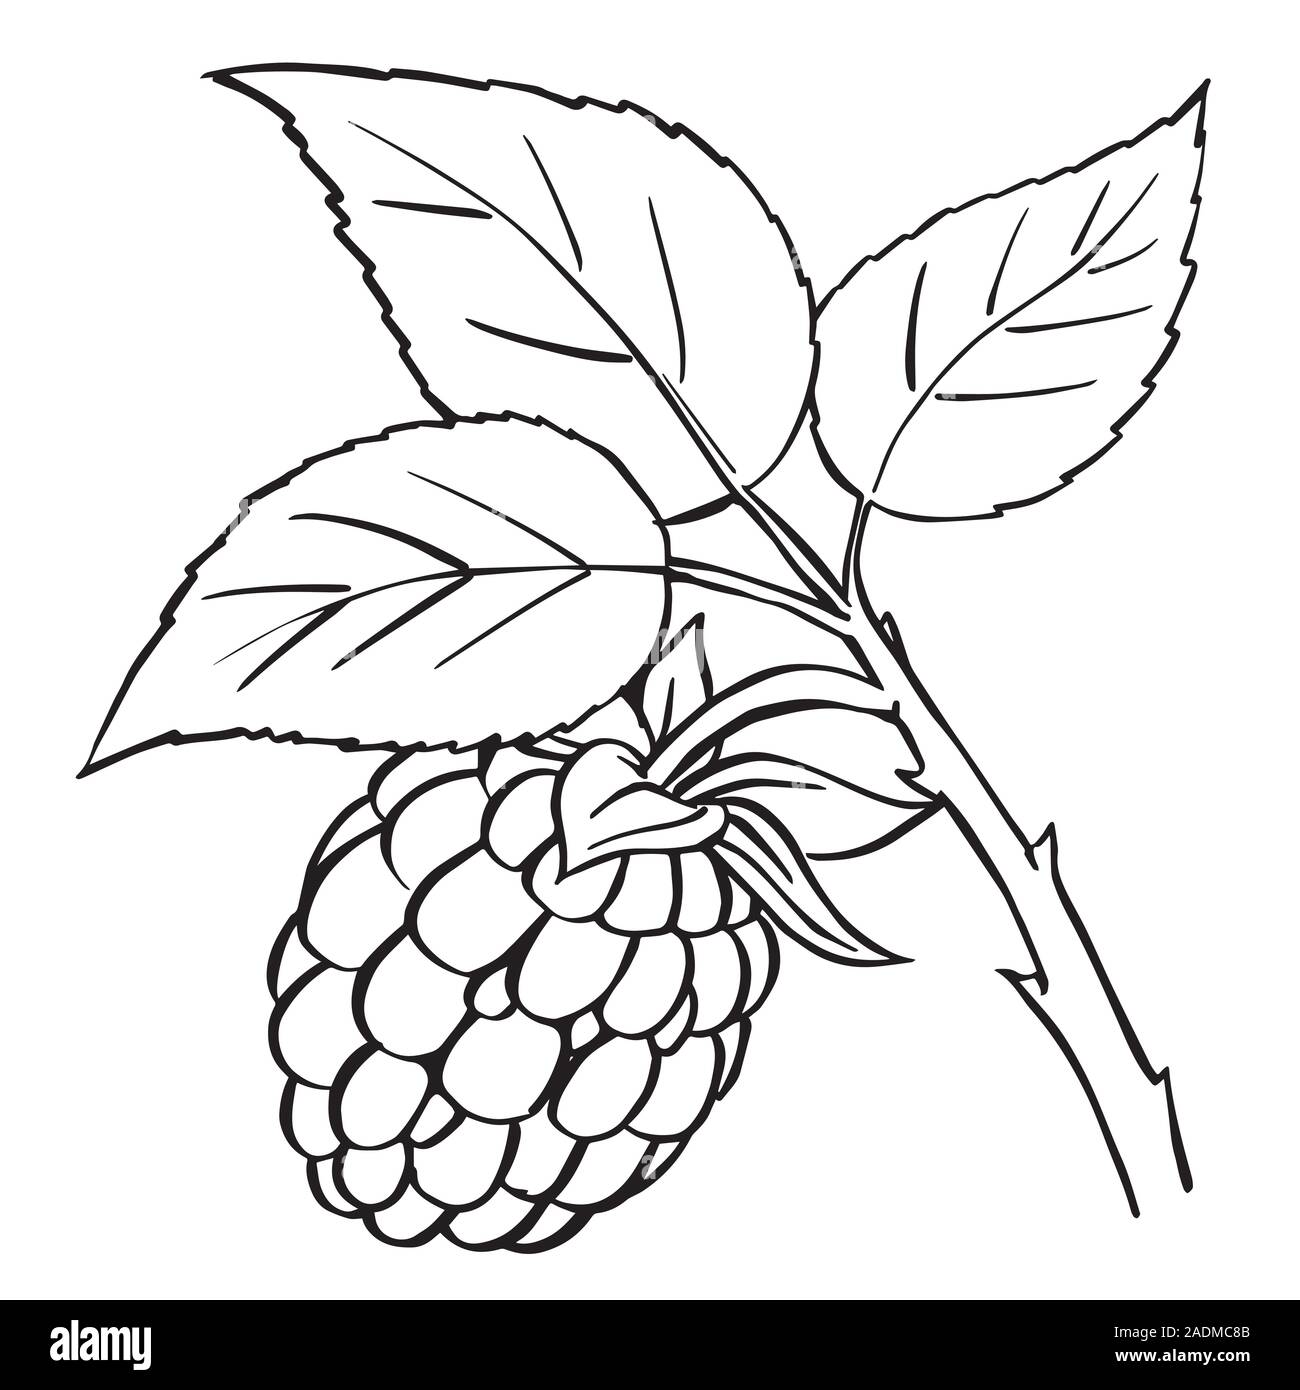 Raspberry plant drawing hi